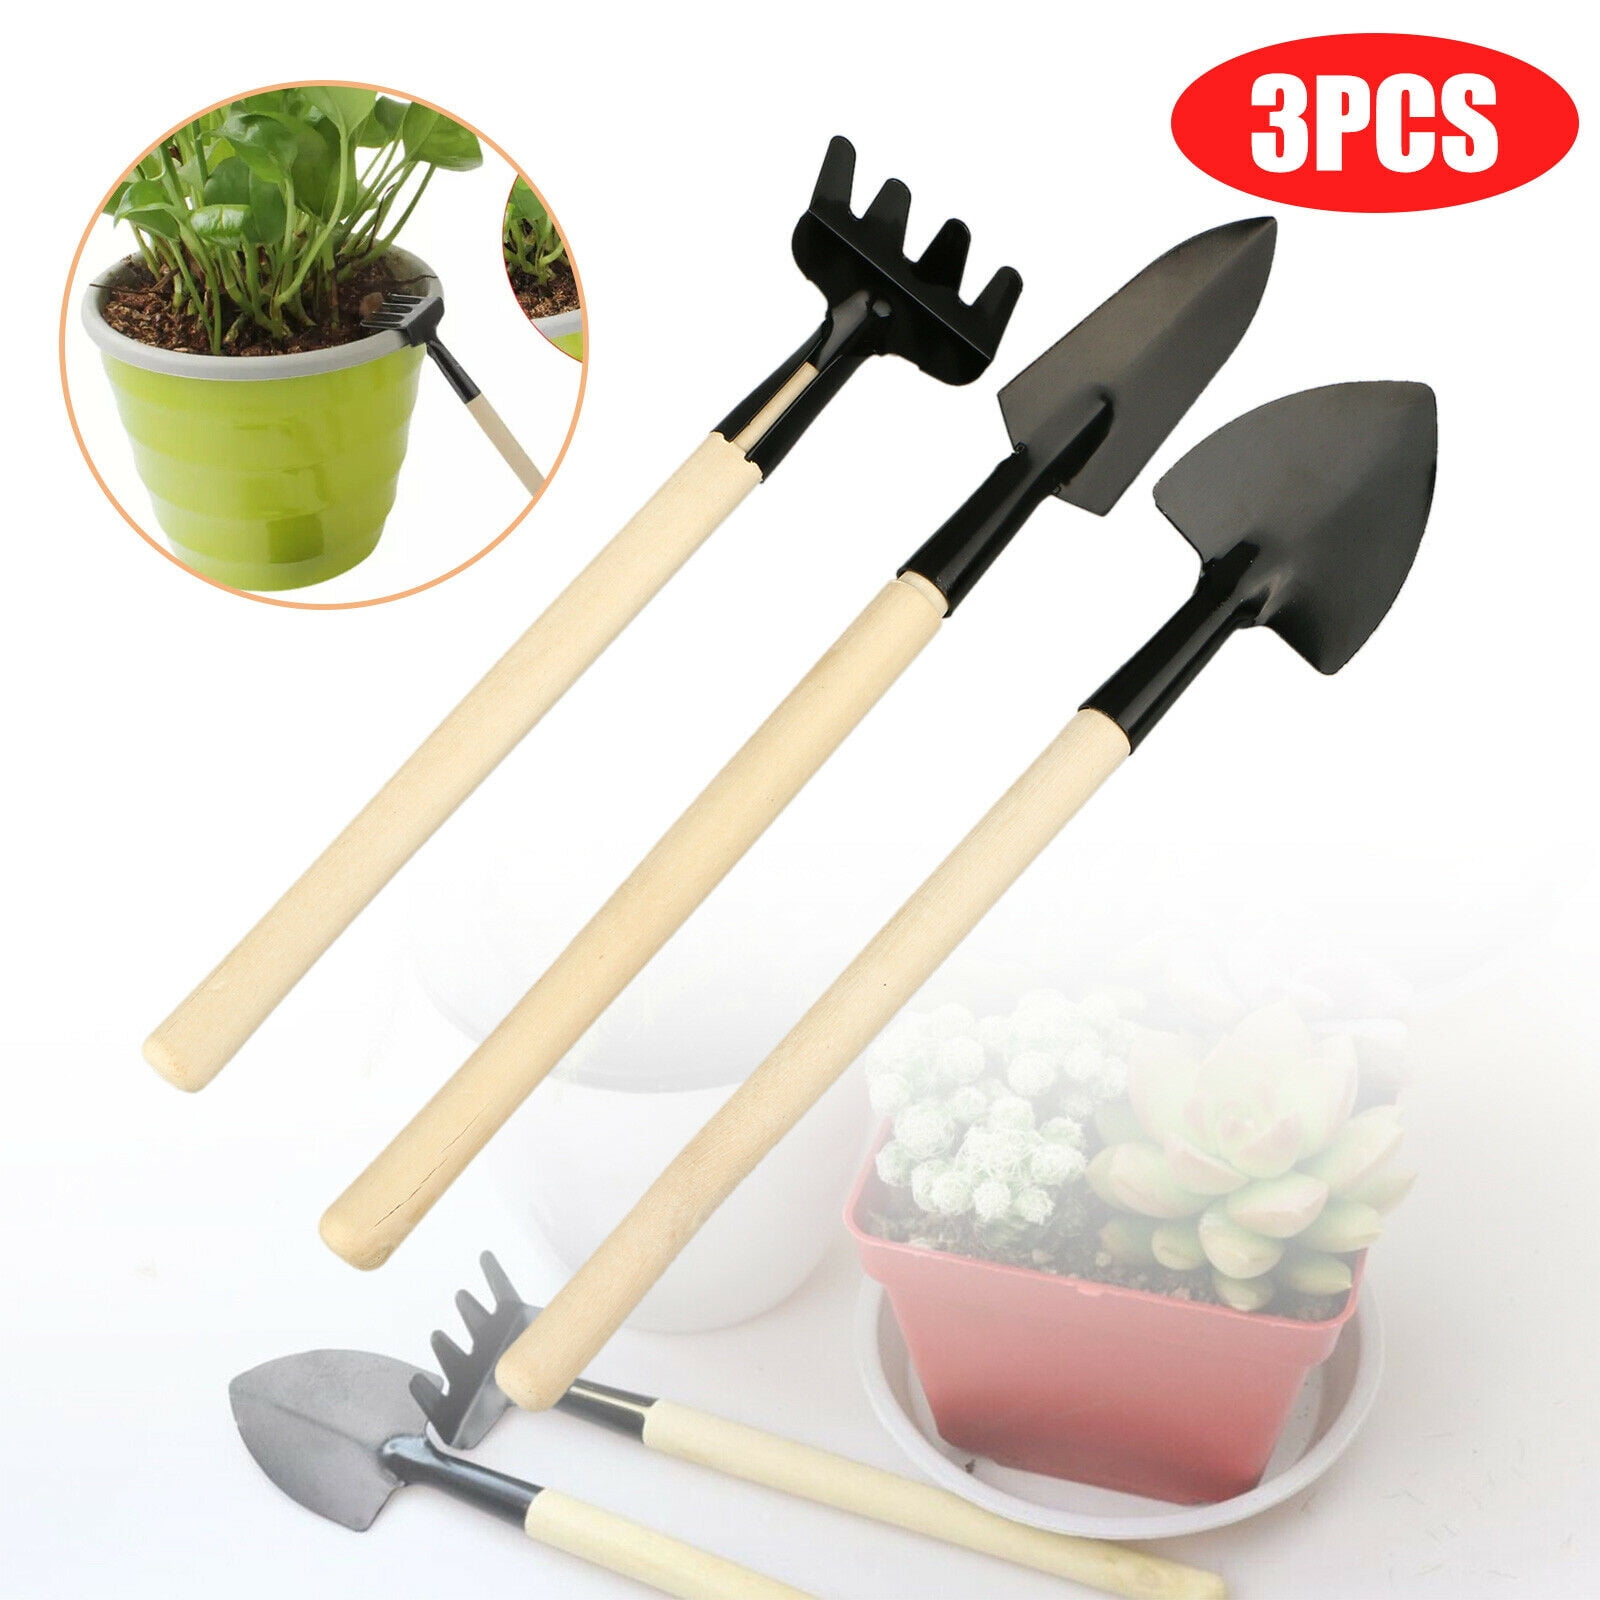 3pcs Mini Garden Tool Sets Shovel Rake Spade Wood Handle Metal Head Kids Tools 